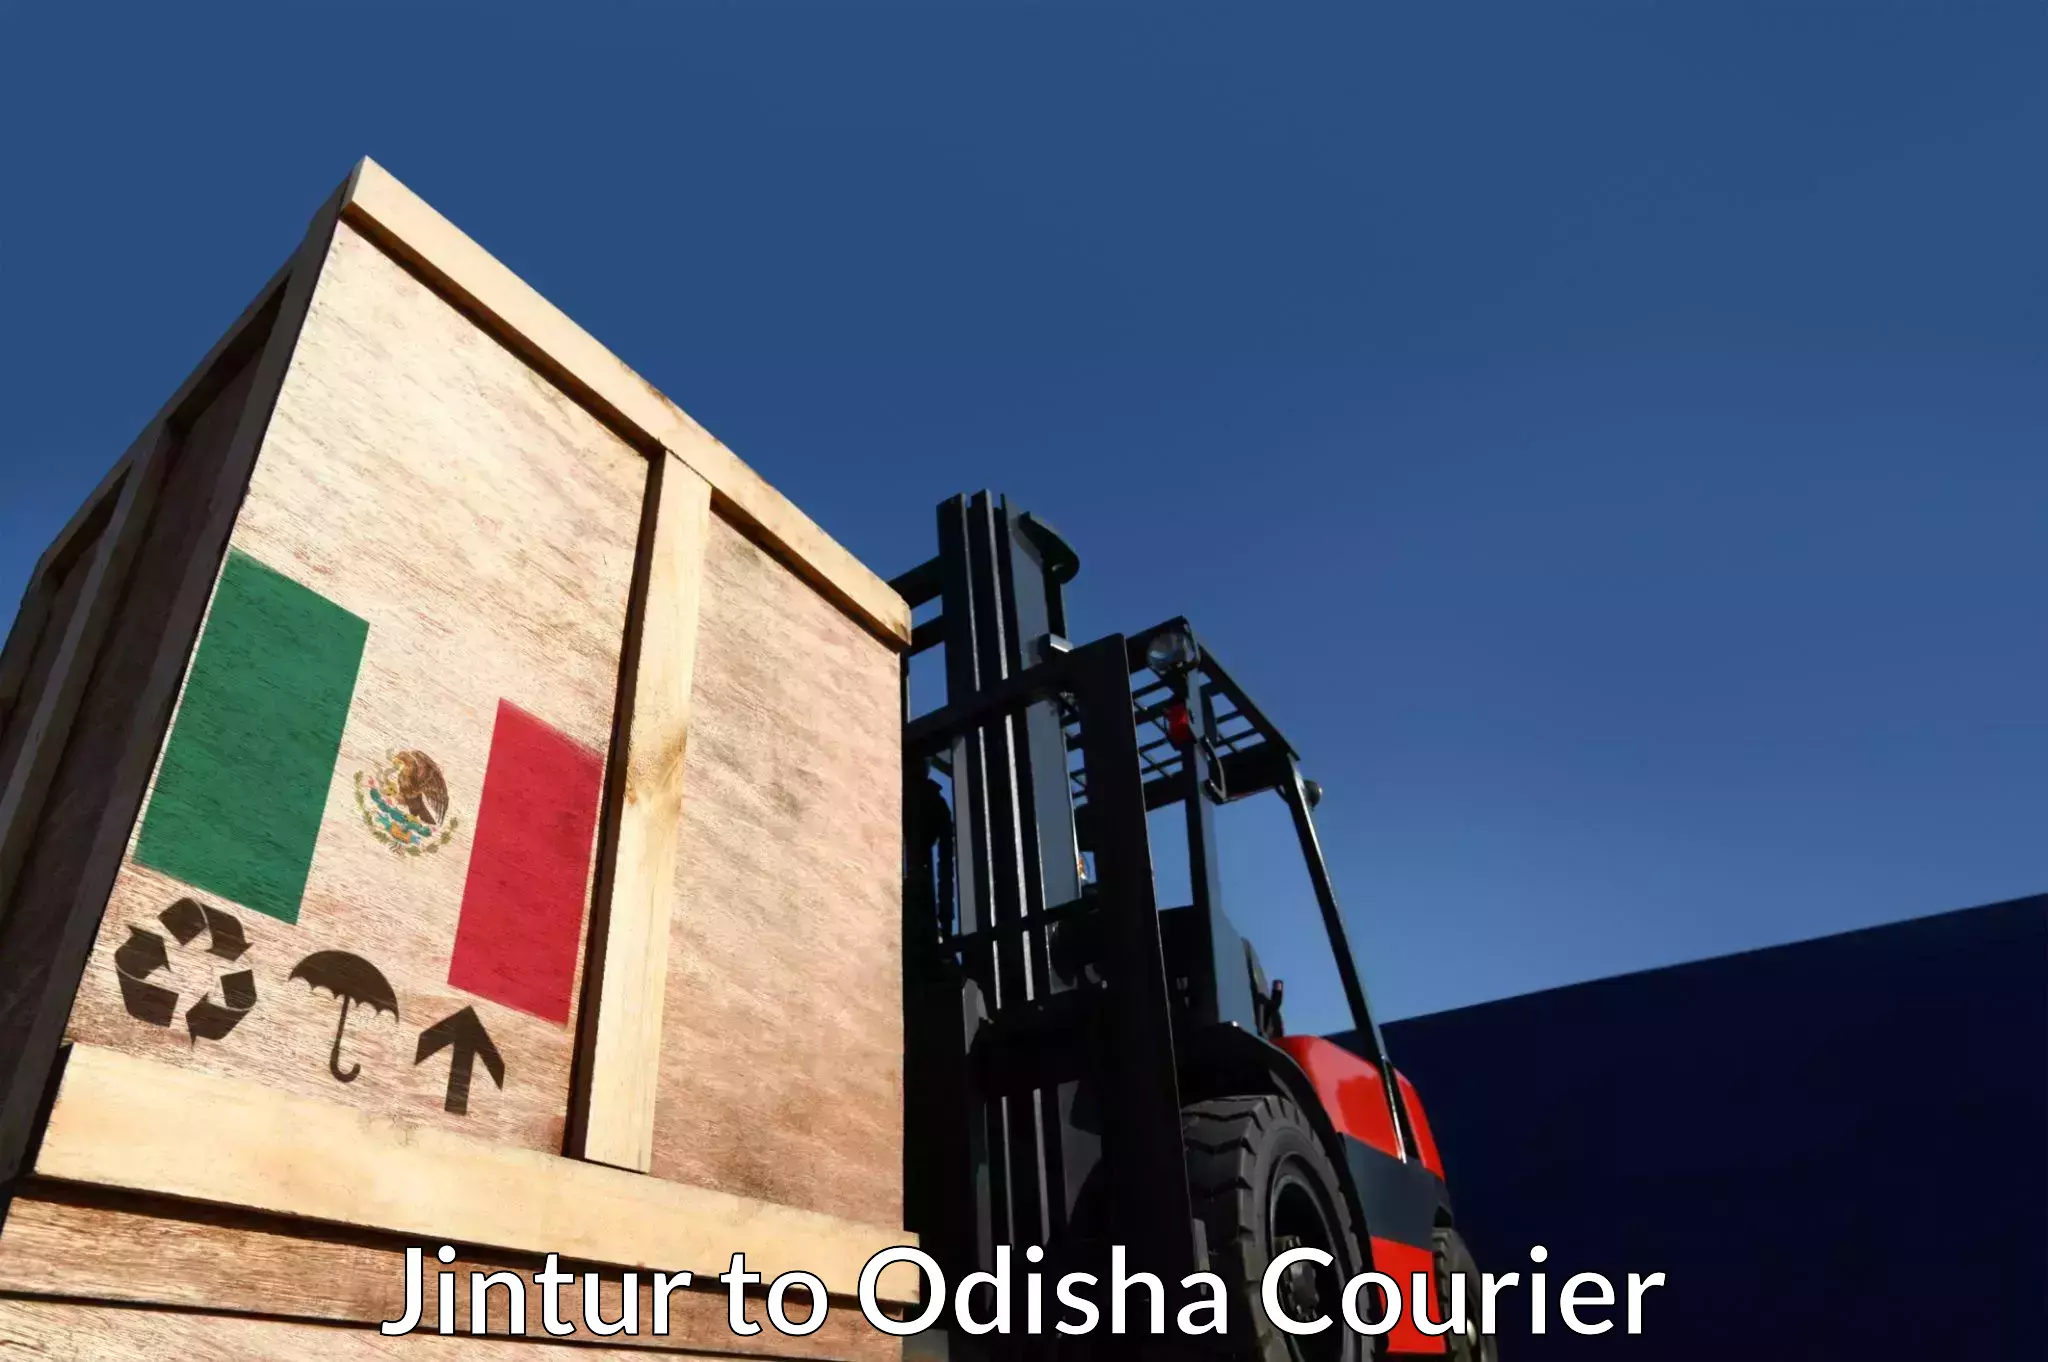 Customer-centric shipping Jintur to Adaspur